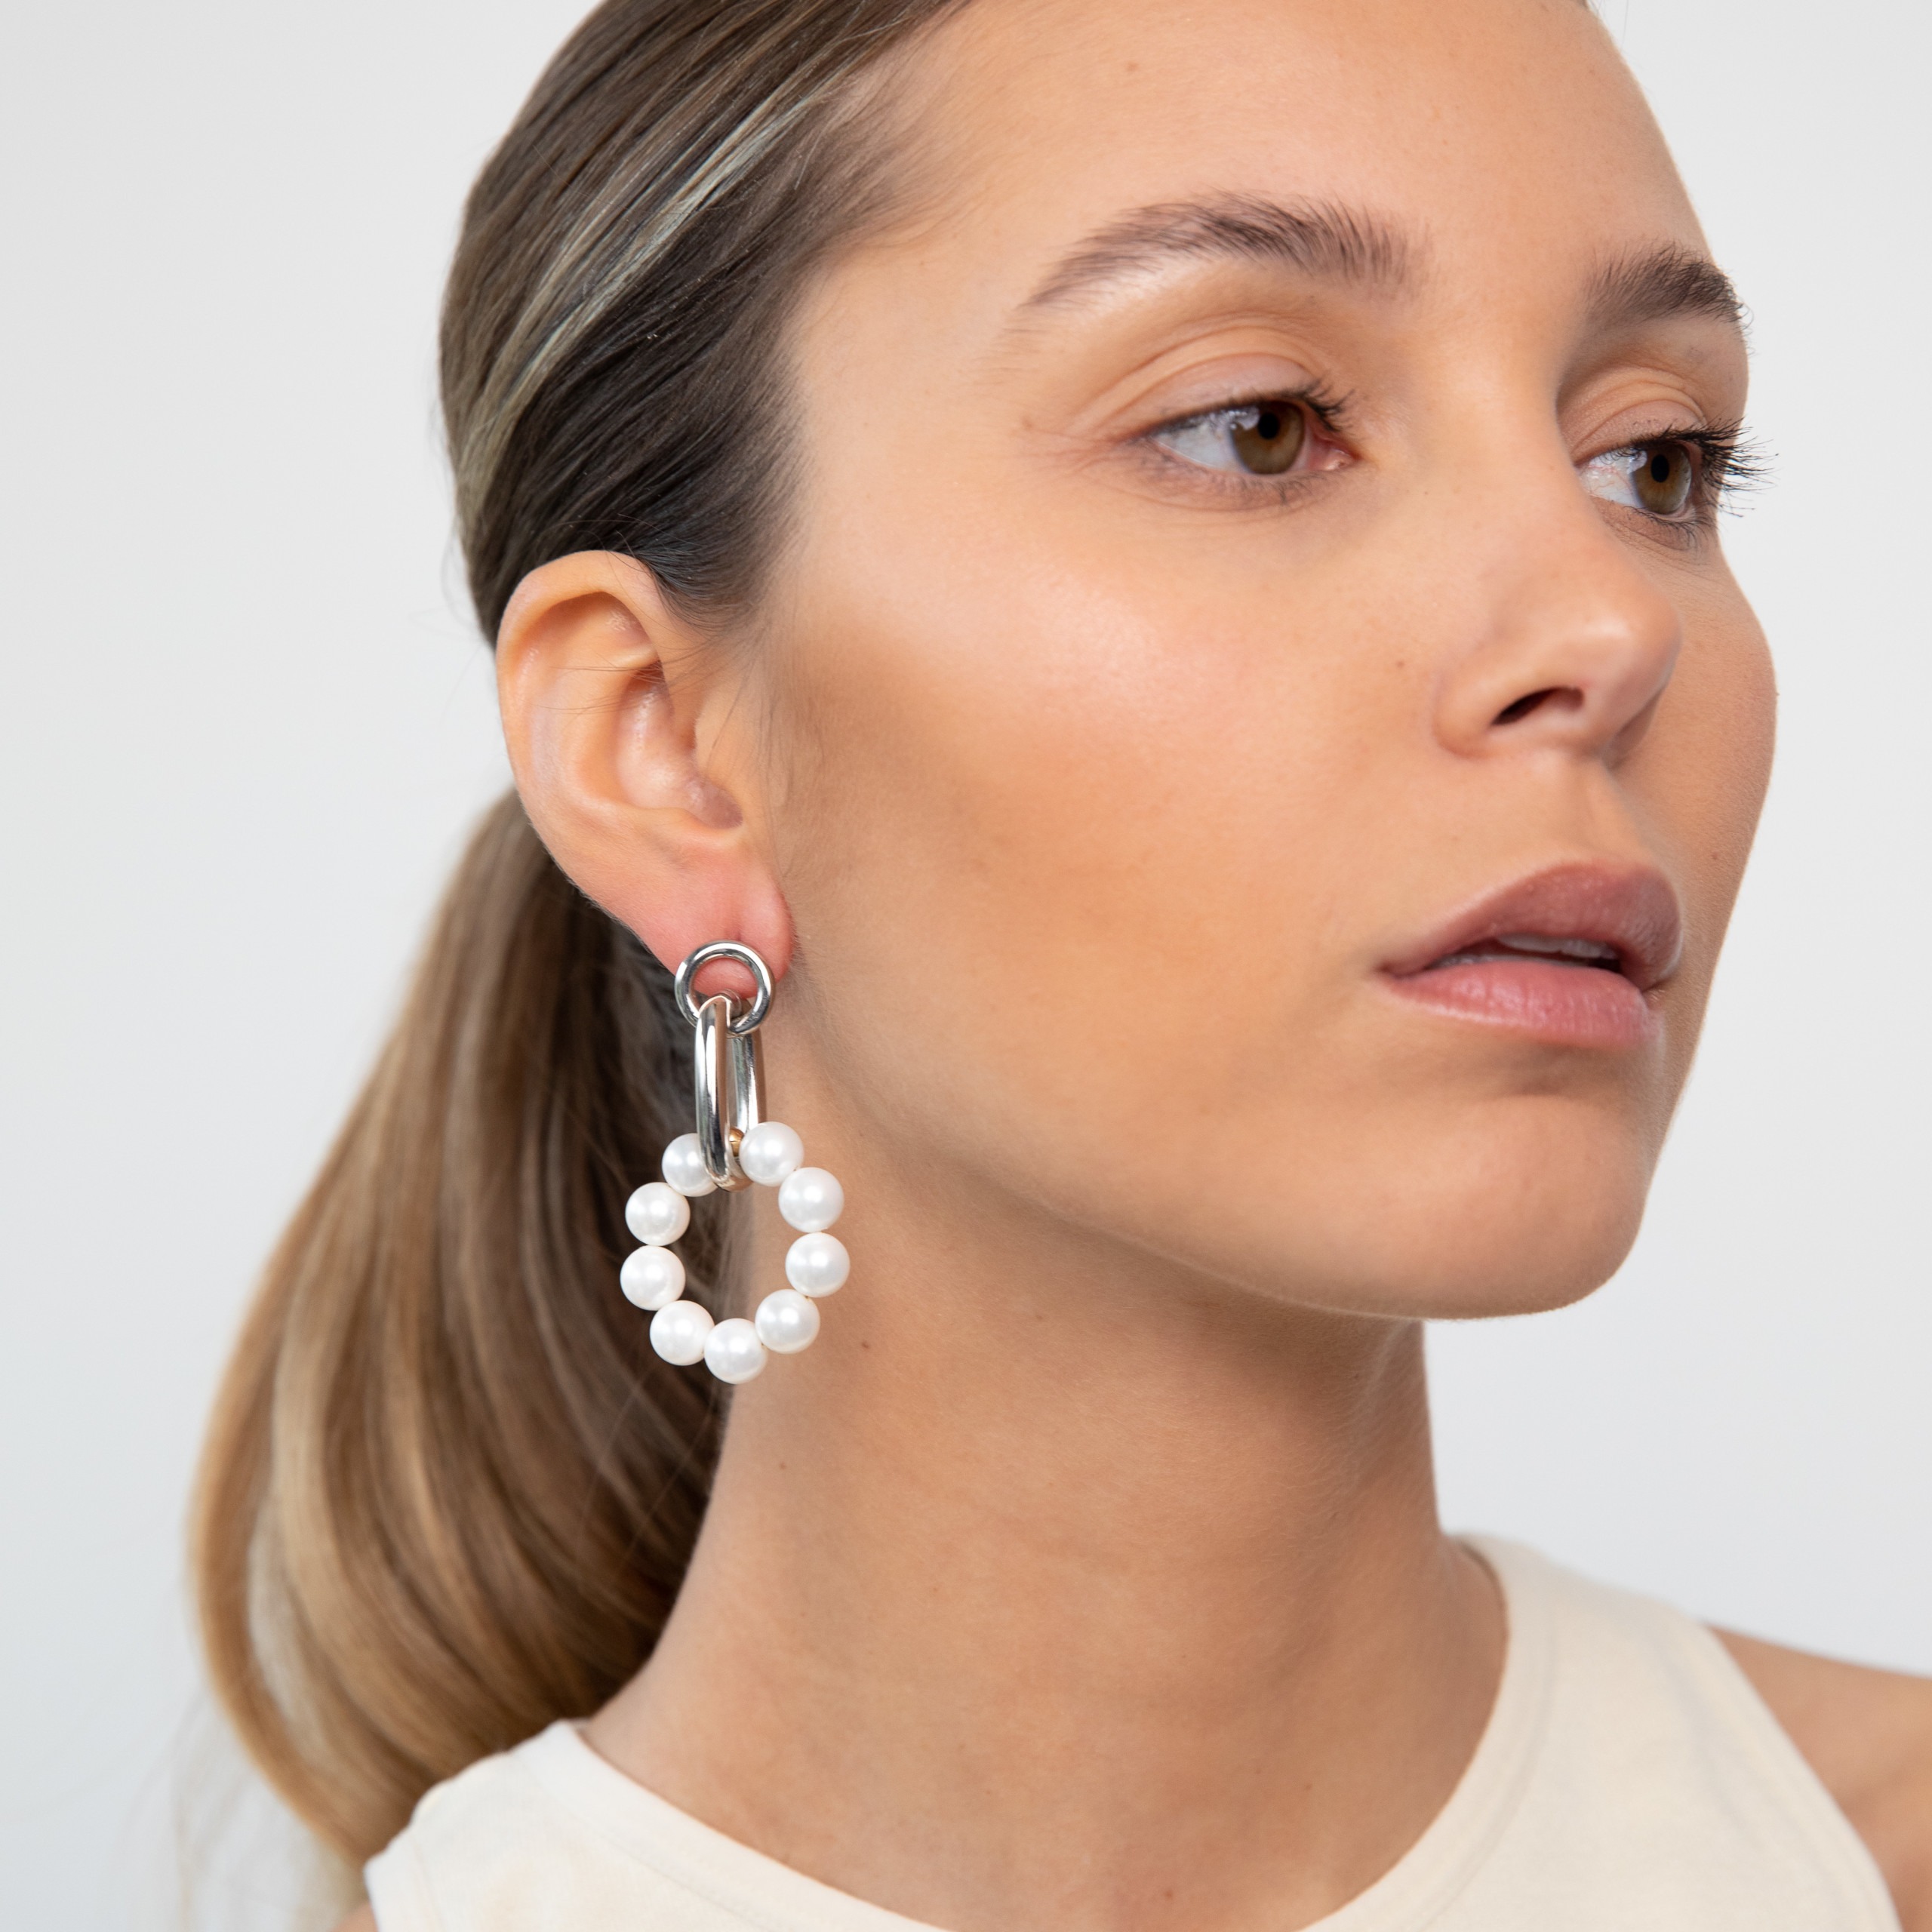 Evi silver pearls earrings